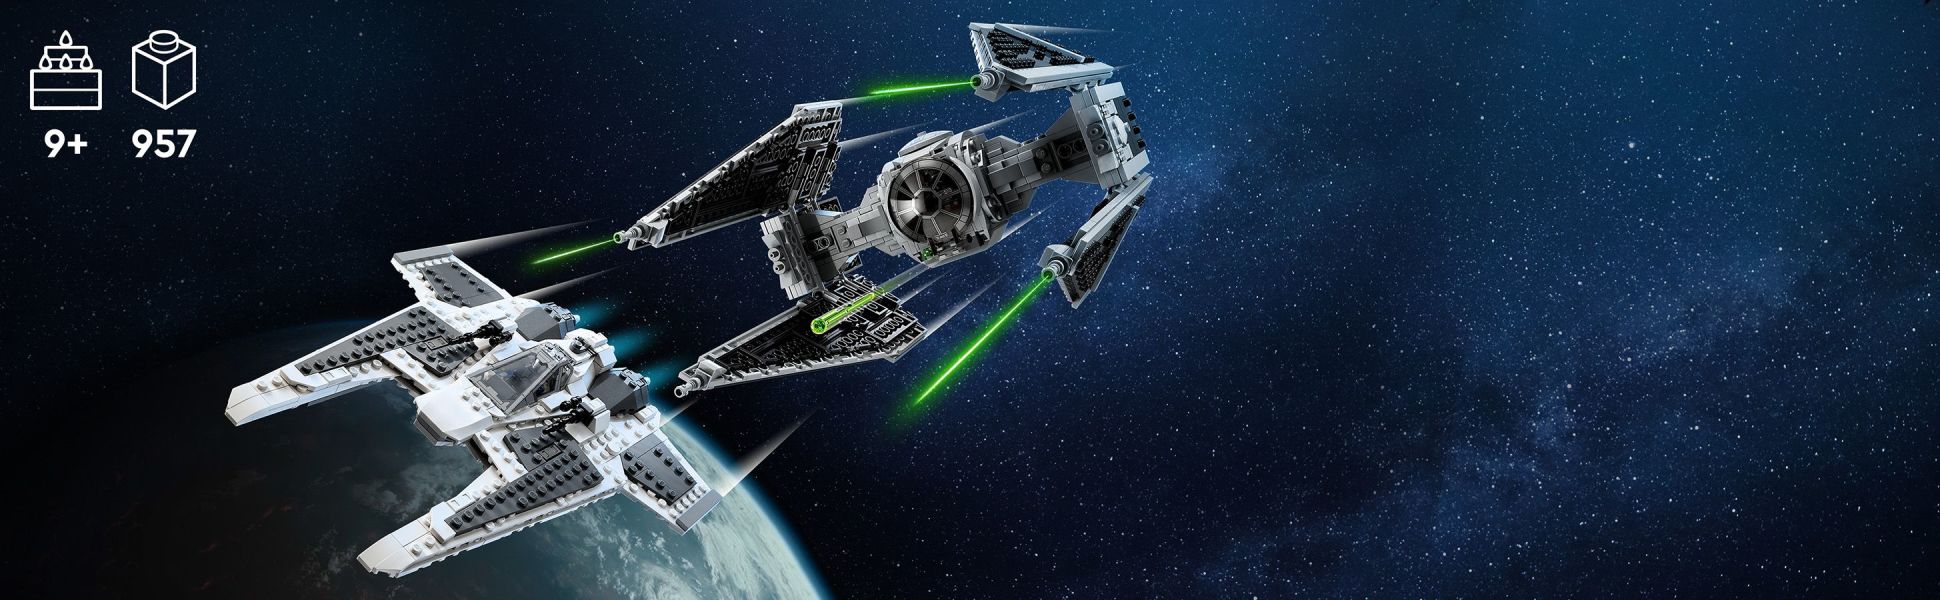 LEGO Star Wars Mandalorian Fang Fighter vs. TIE Interceptor 75348 6427682 -  Best Buy